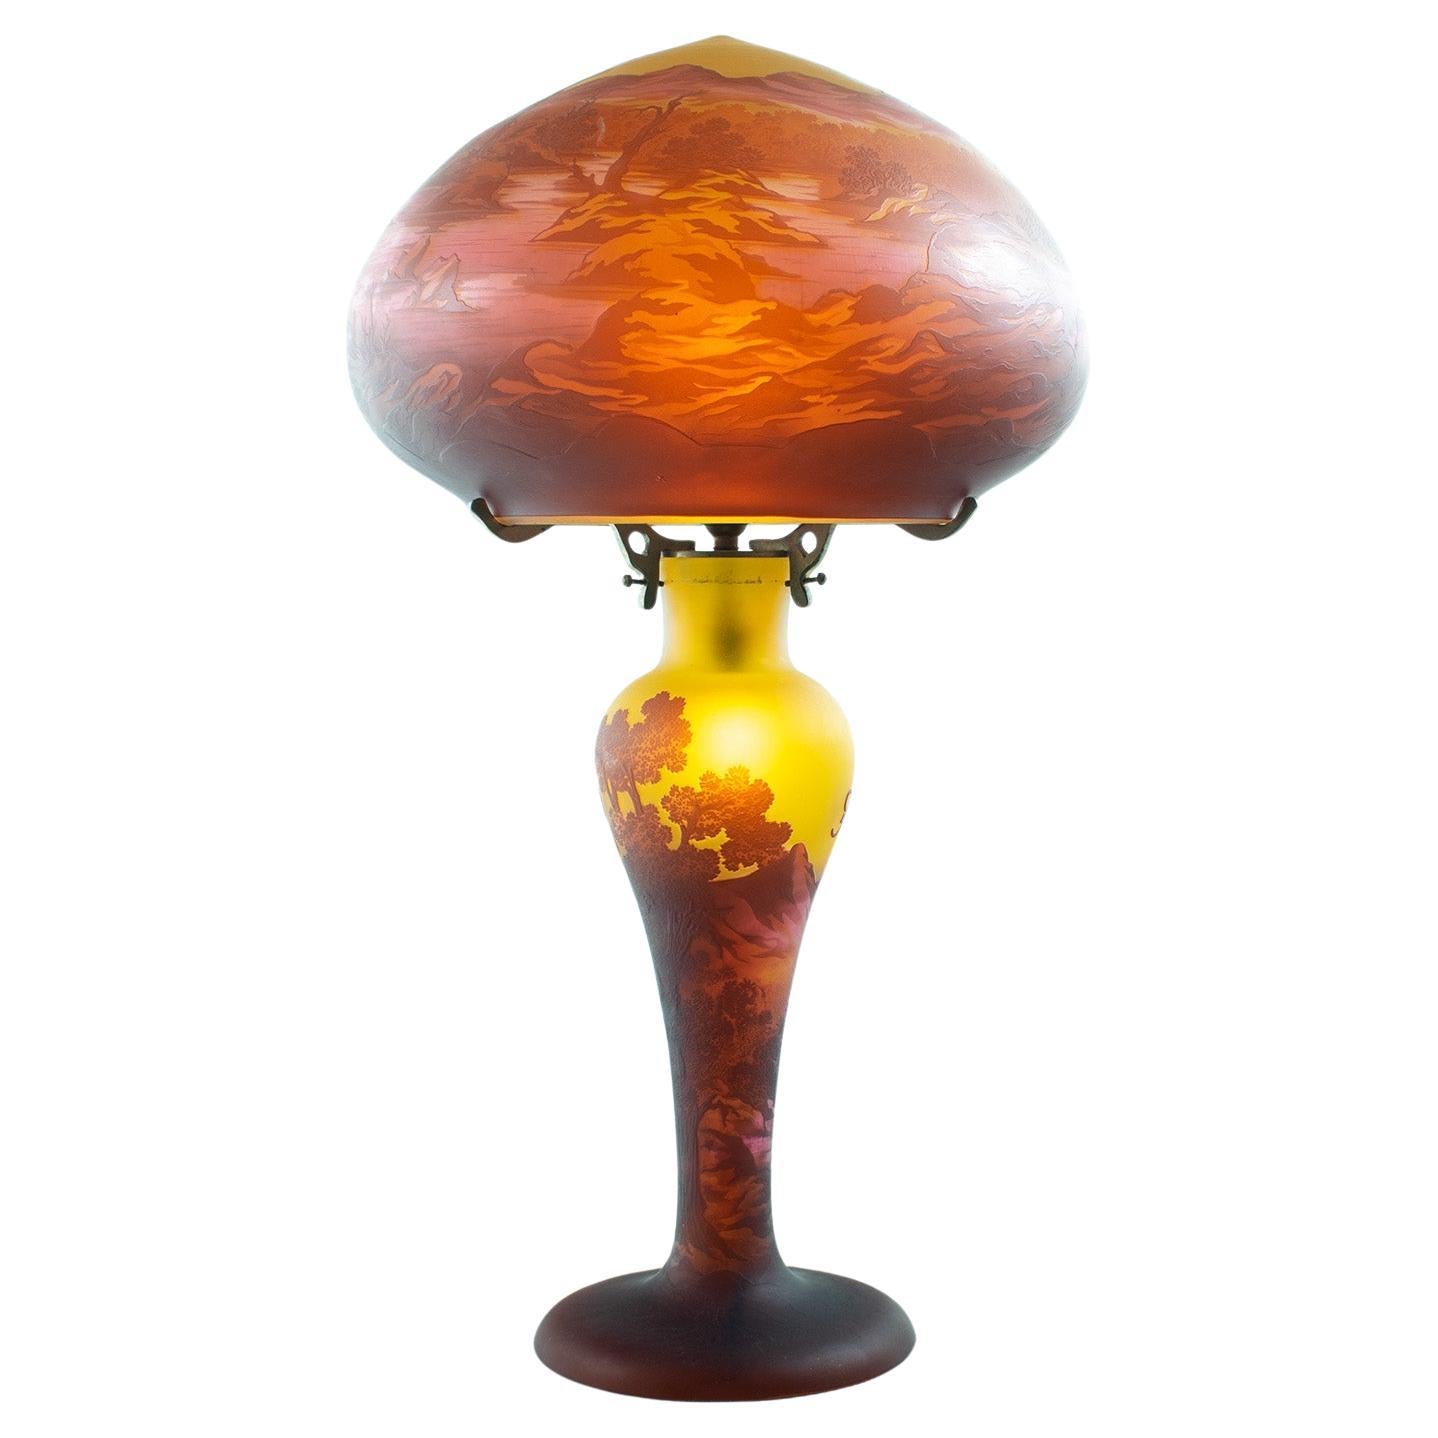 Gallè Tip - Impressive Large ART NOUVEAU MUSHROOM LAMP in multilayer glass